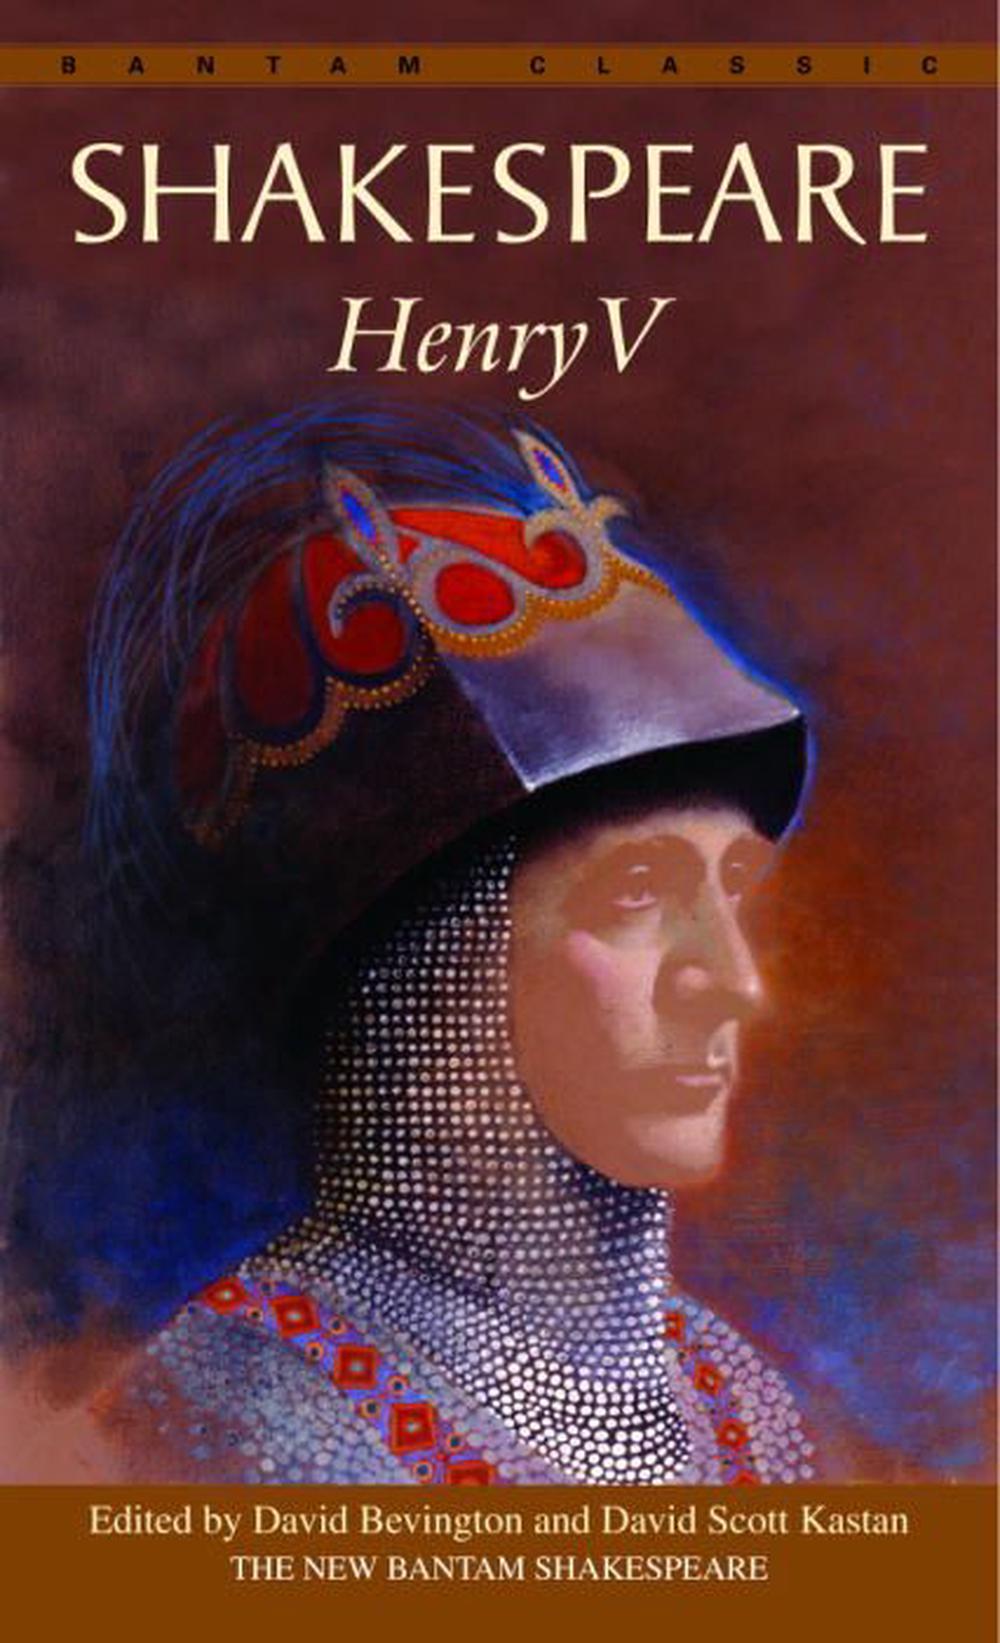 henry v shakespeare essay topics